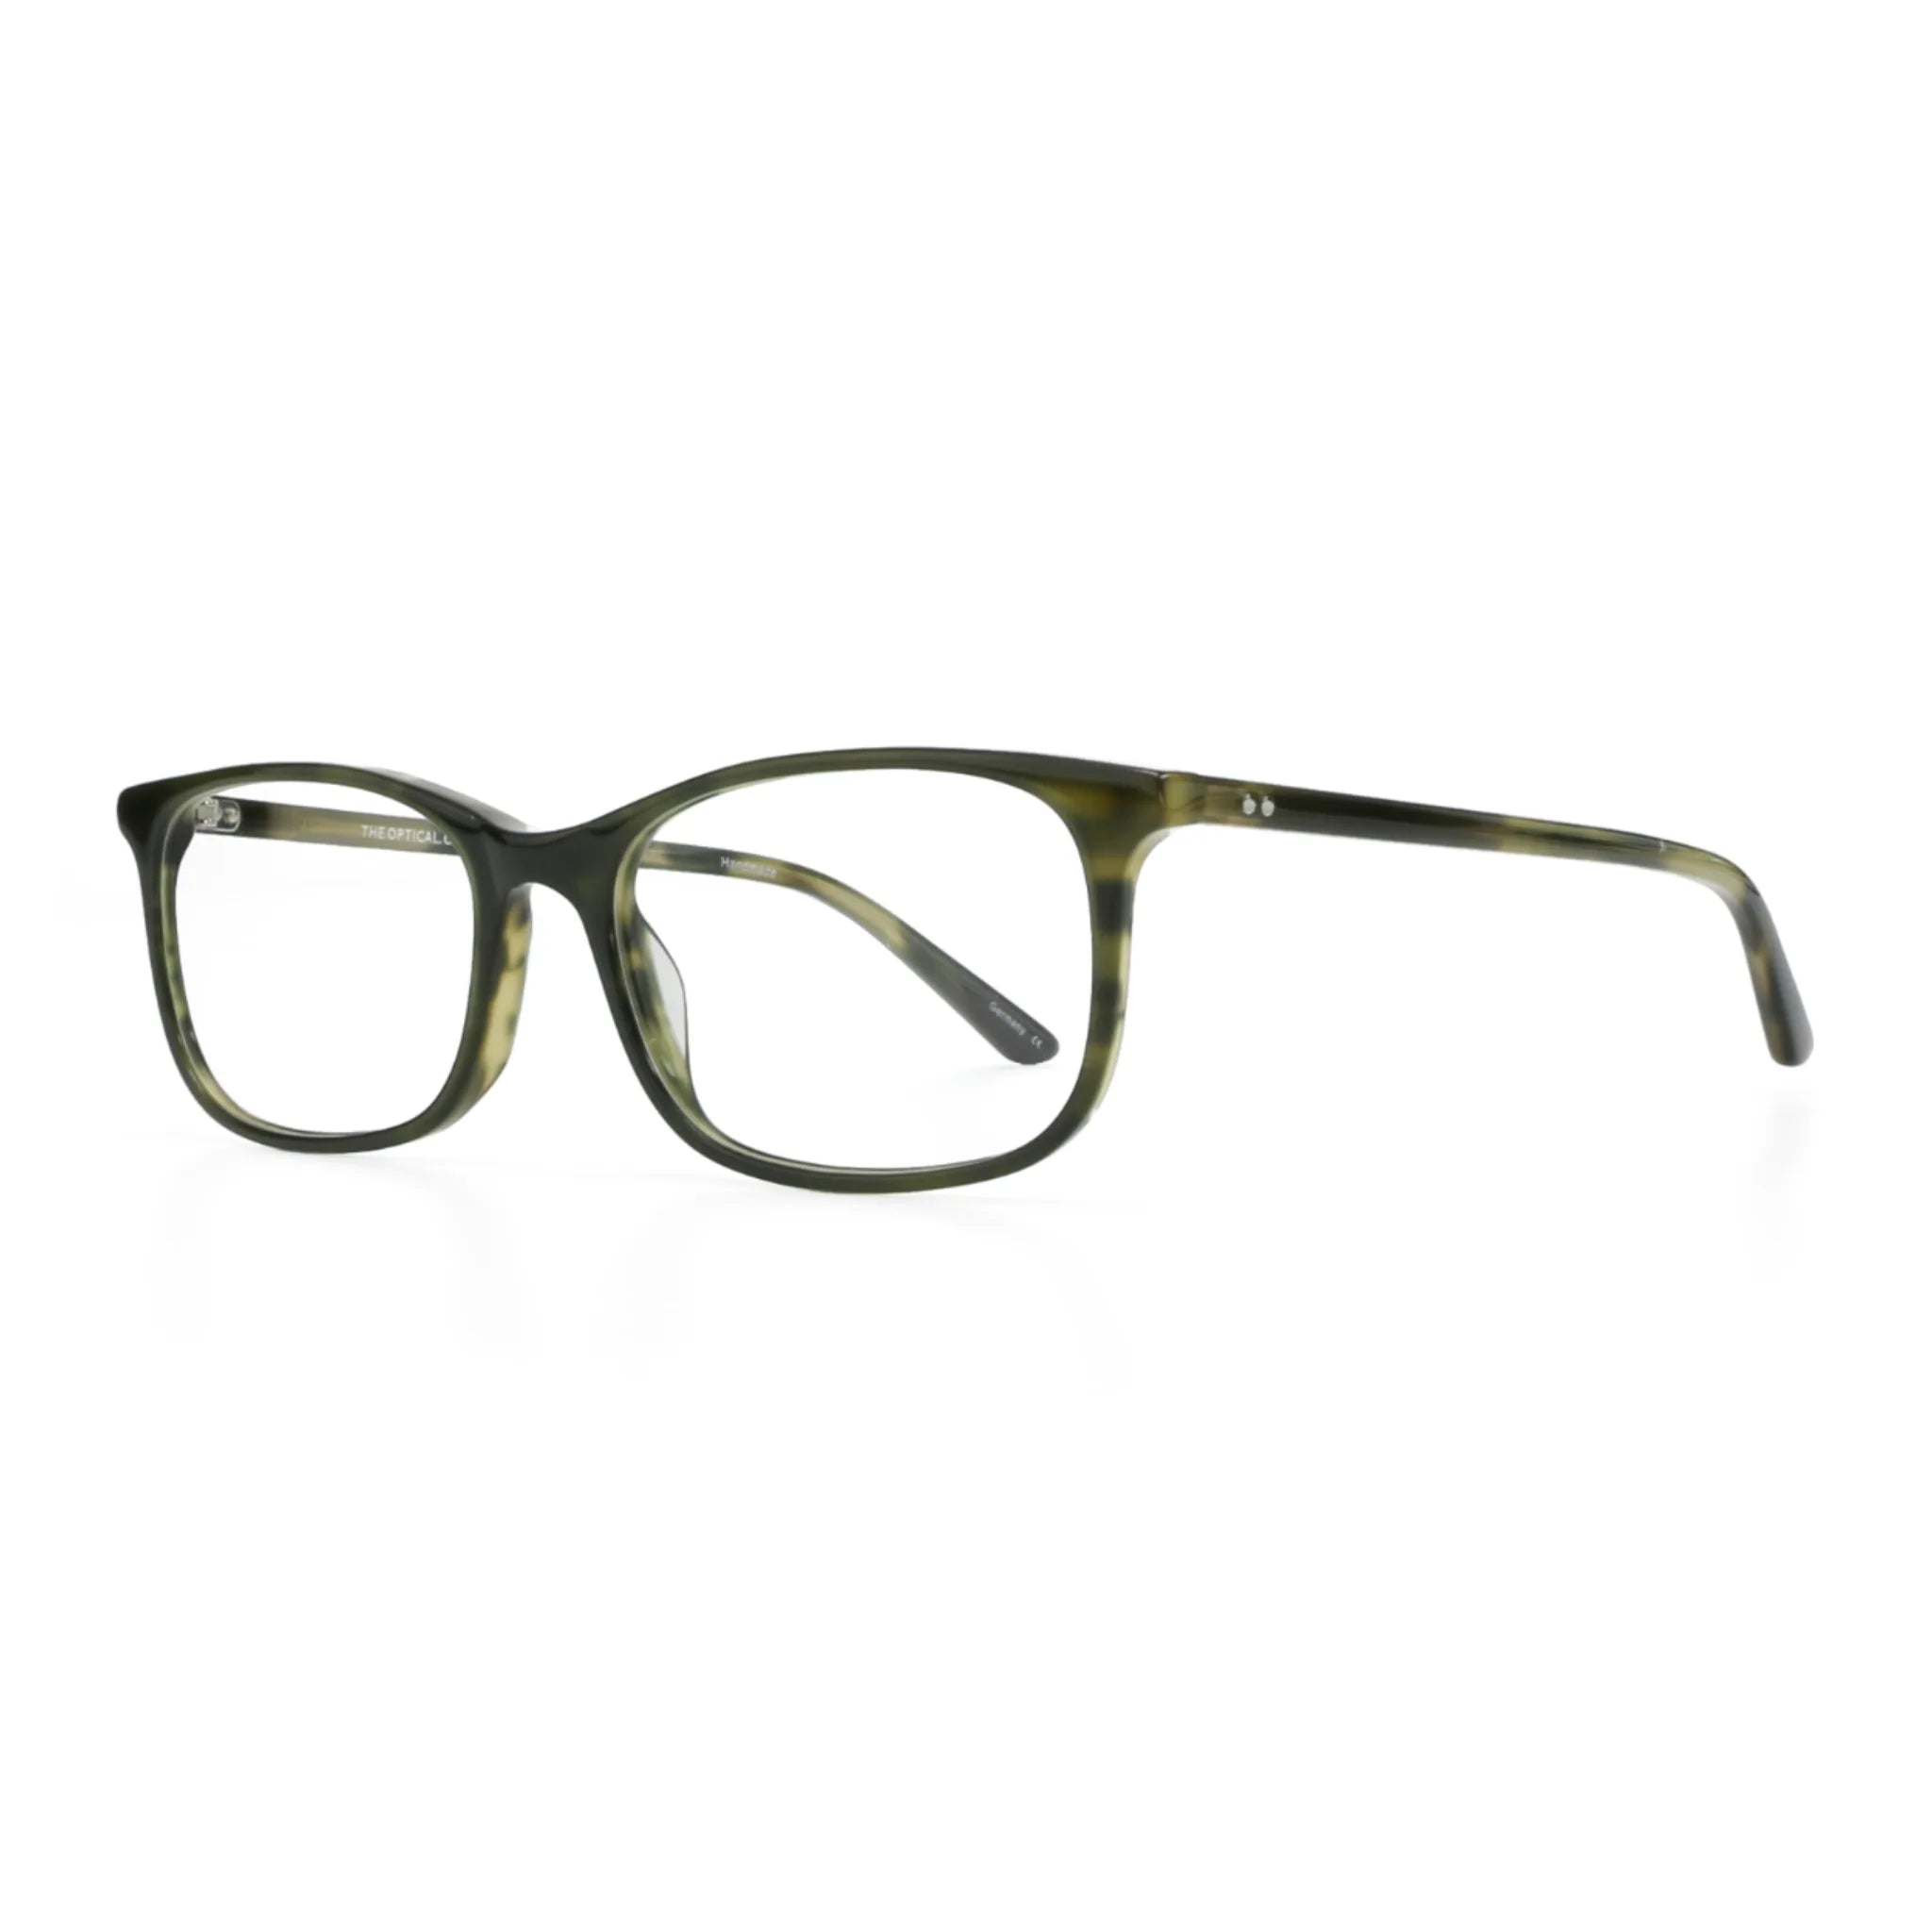 The Optical Co good prescription eyeglasses online